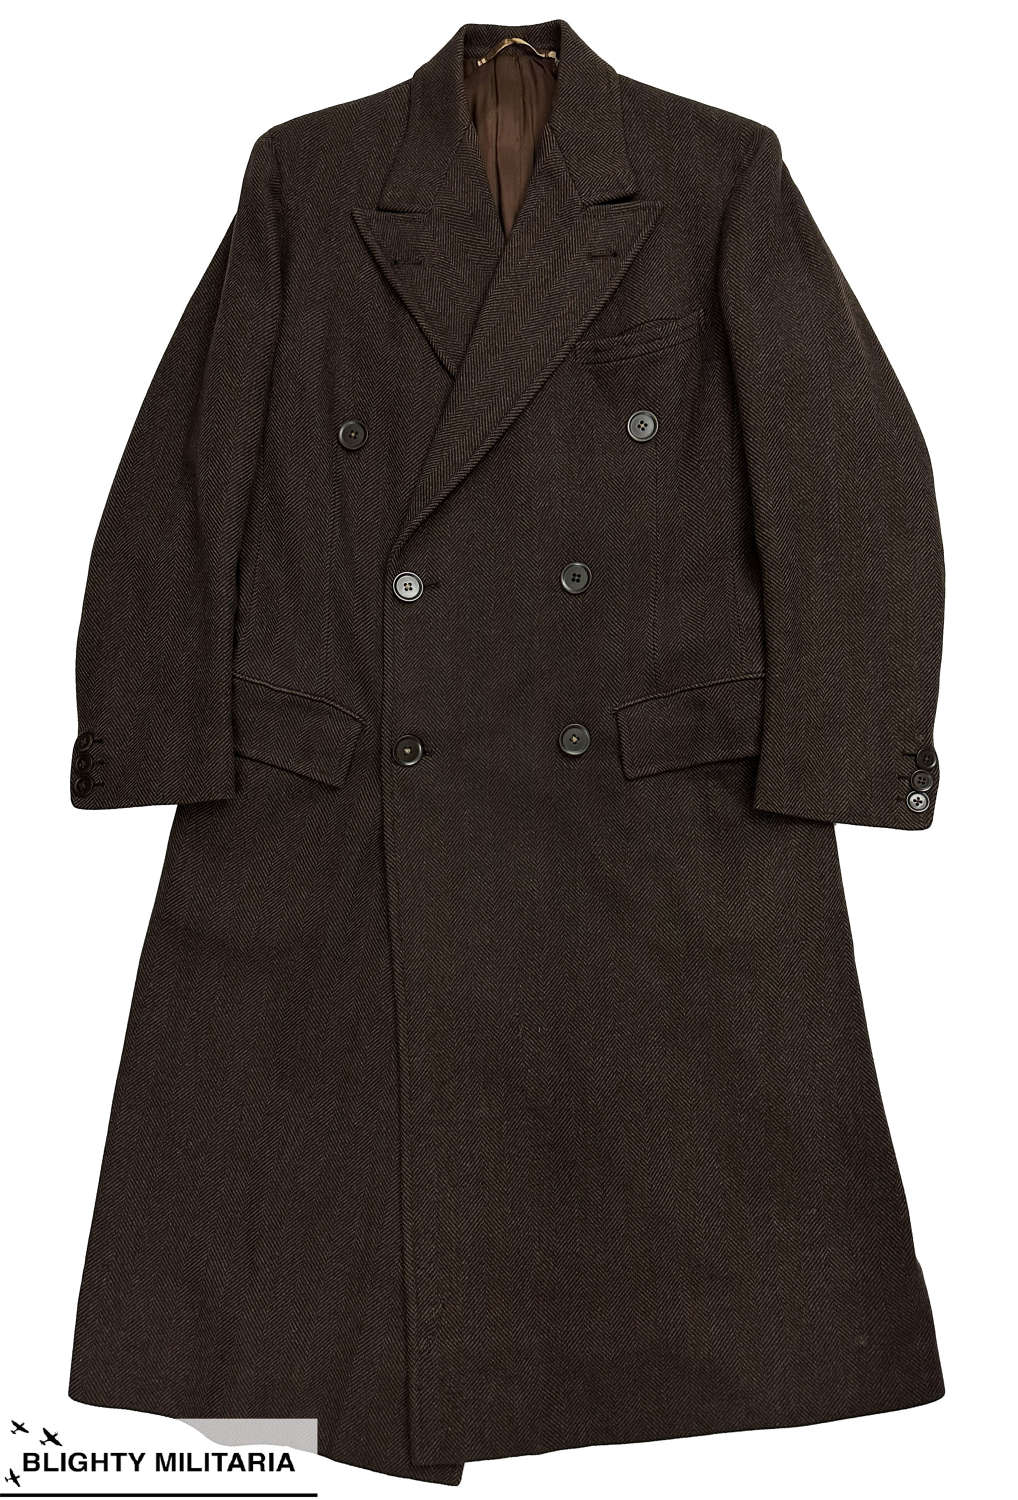 Original 1946 Dated Men's Herringbone Striped Overcoat by T. C. Marsh